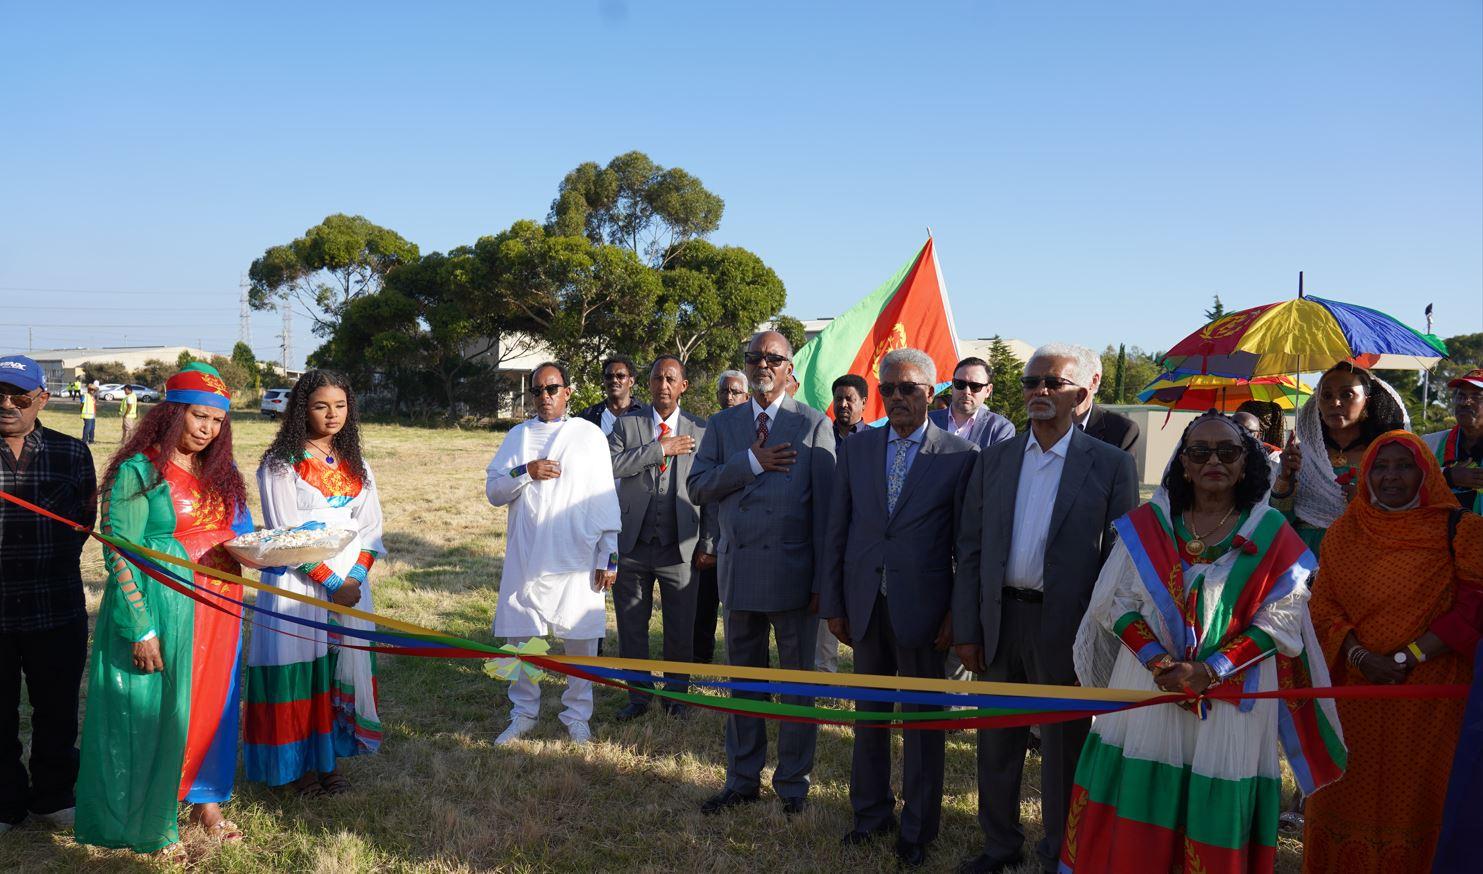 Eritrean community festival in Australia and New Zealand